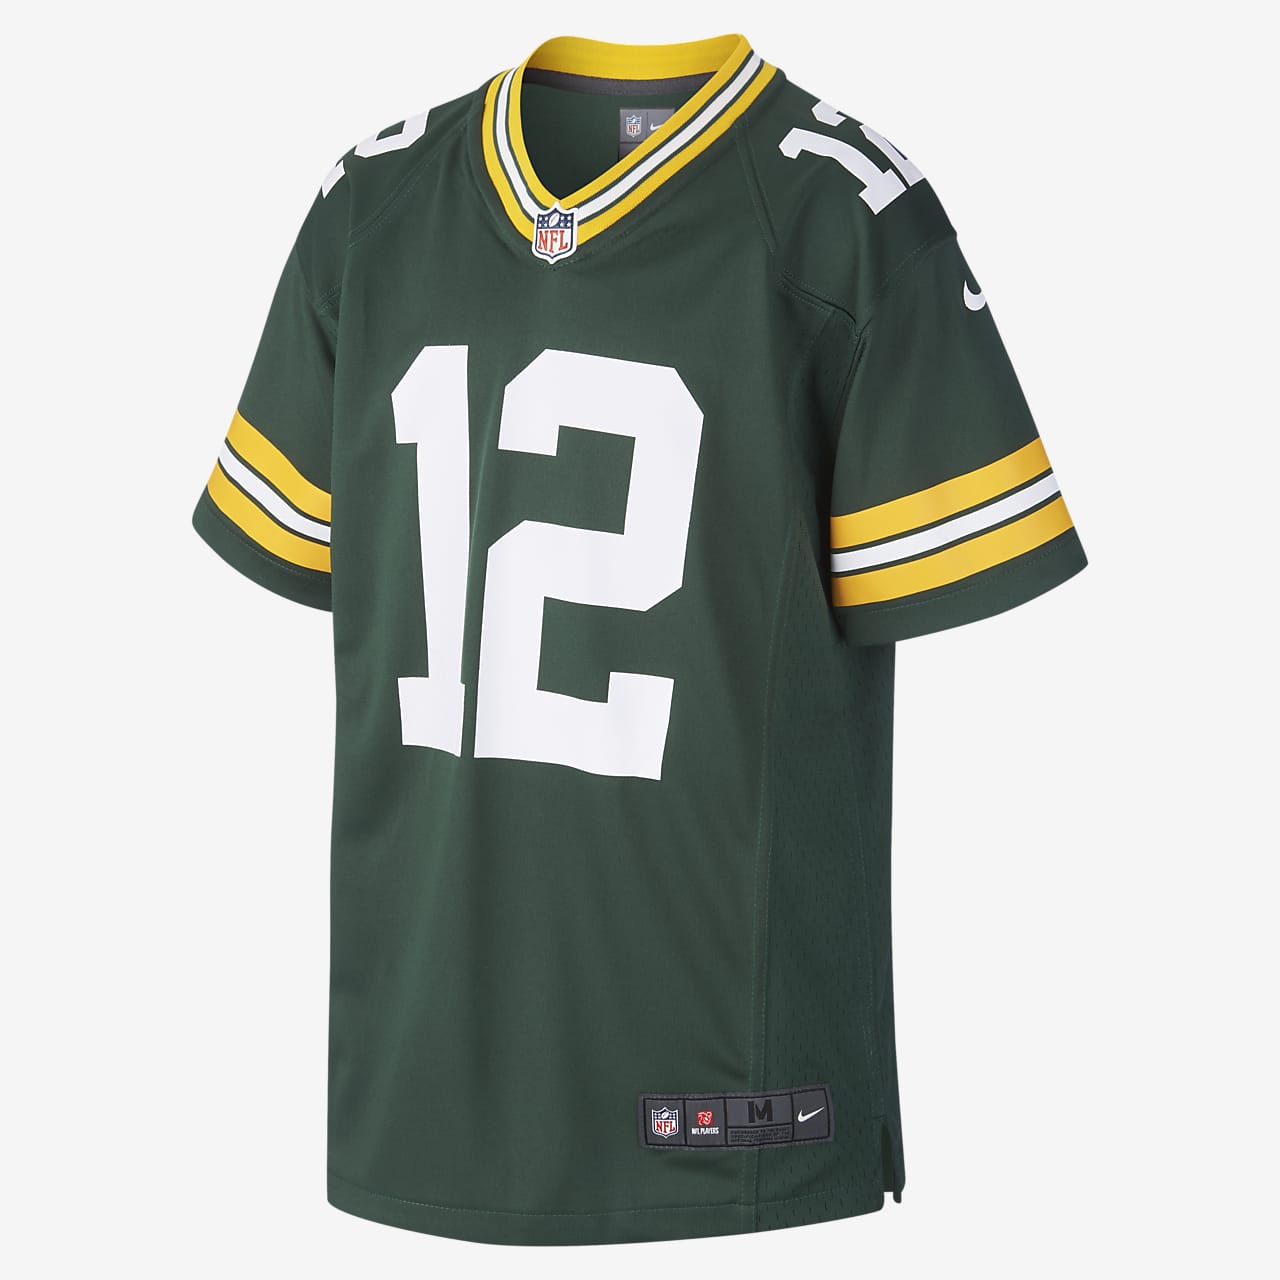 NFL Green Bay Packers Game Jersey (Aaron Rodgers) Camiseta de fútbol americano - Niño/a